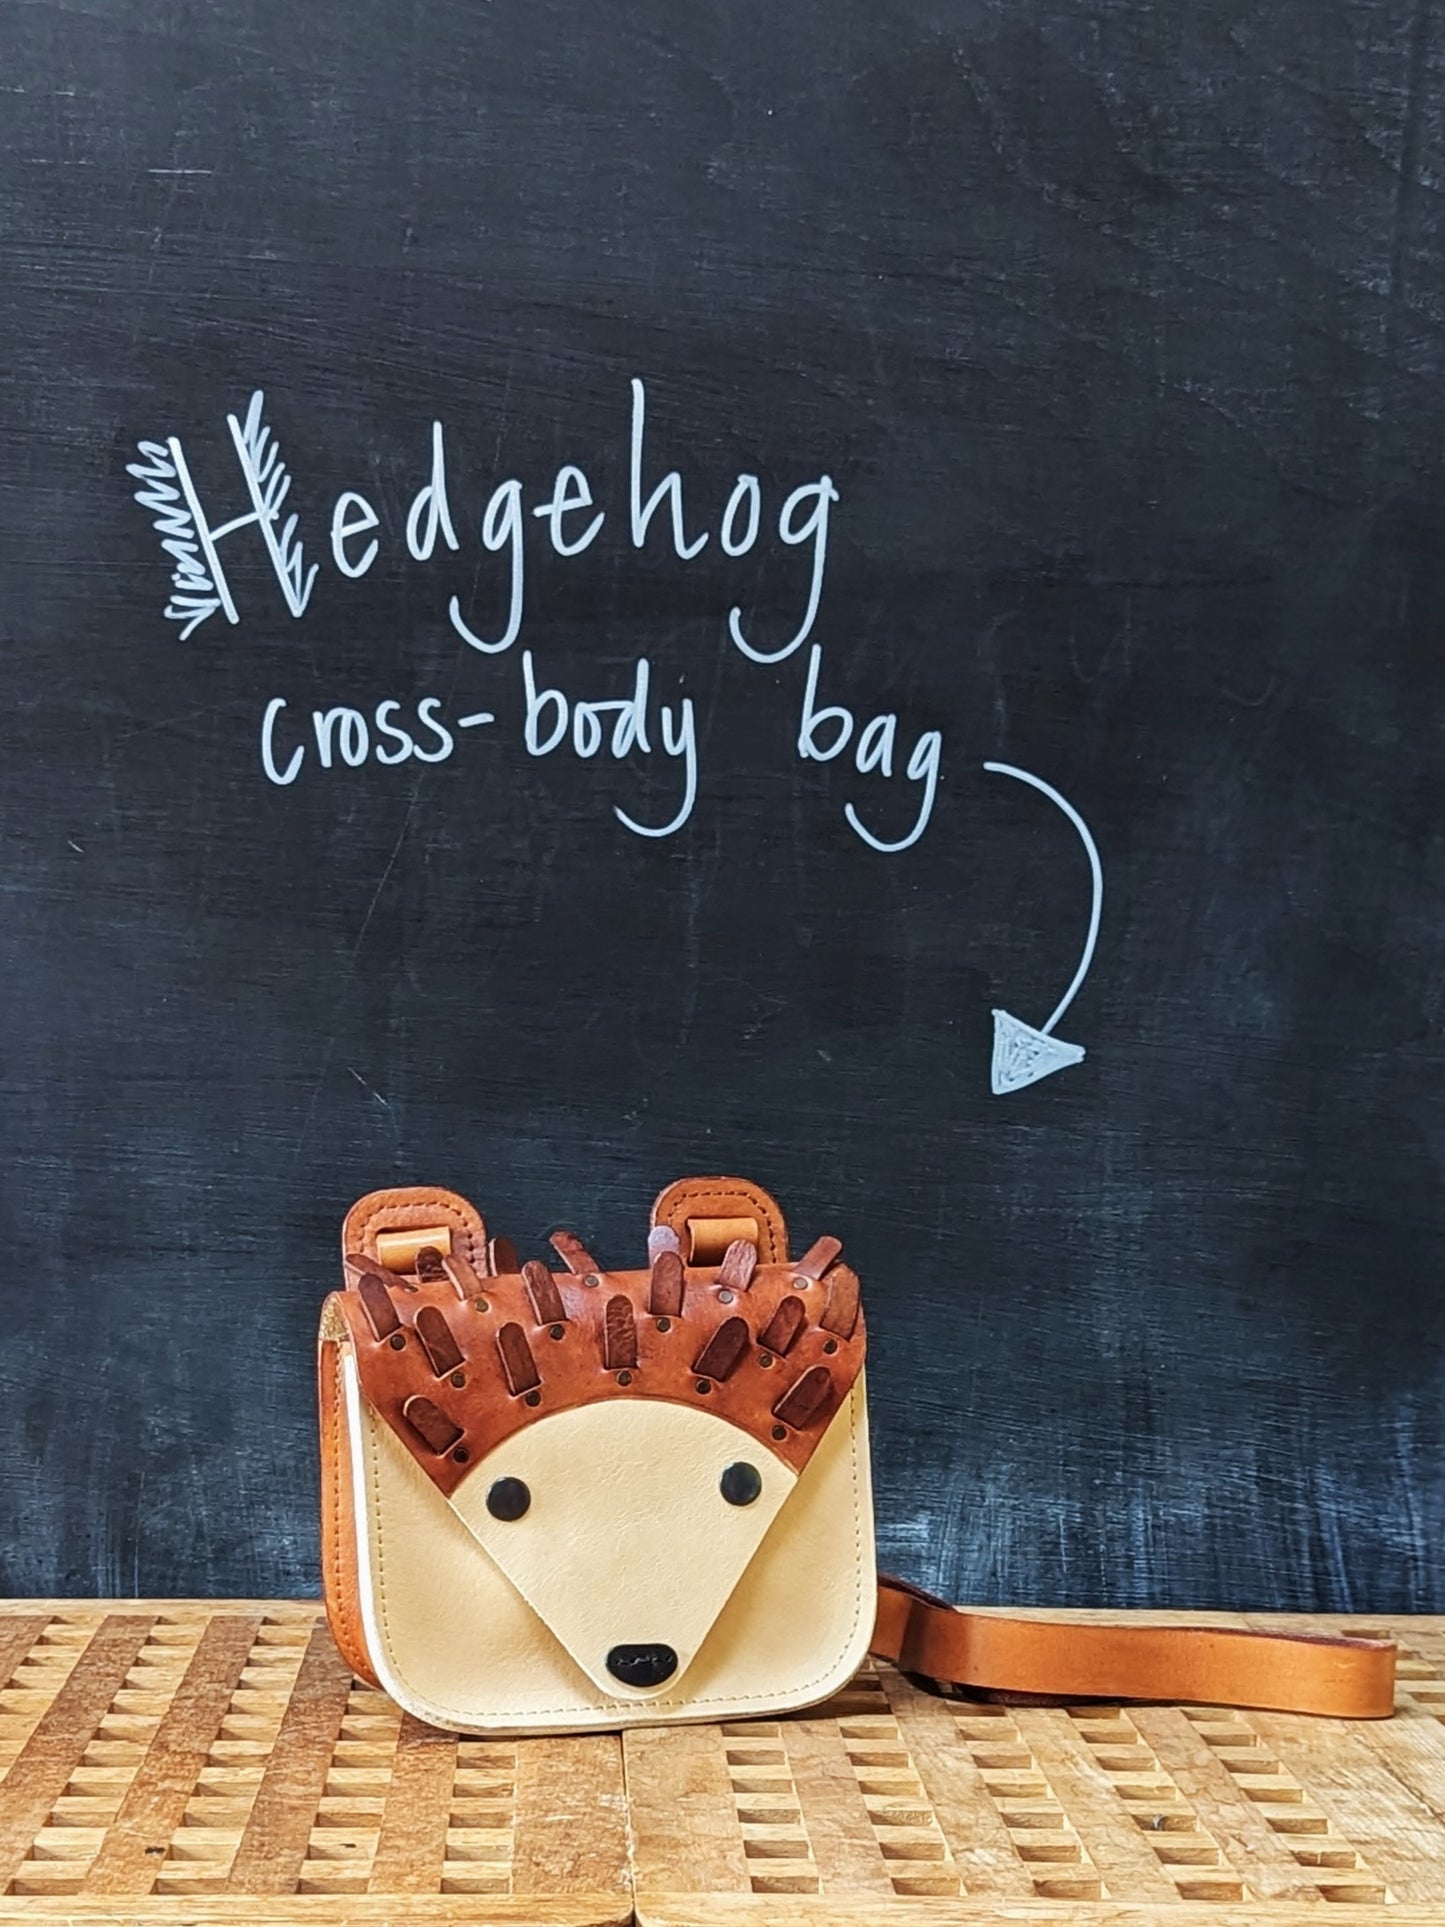 Hedgehog Cross- Body Bag